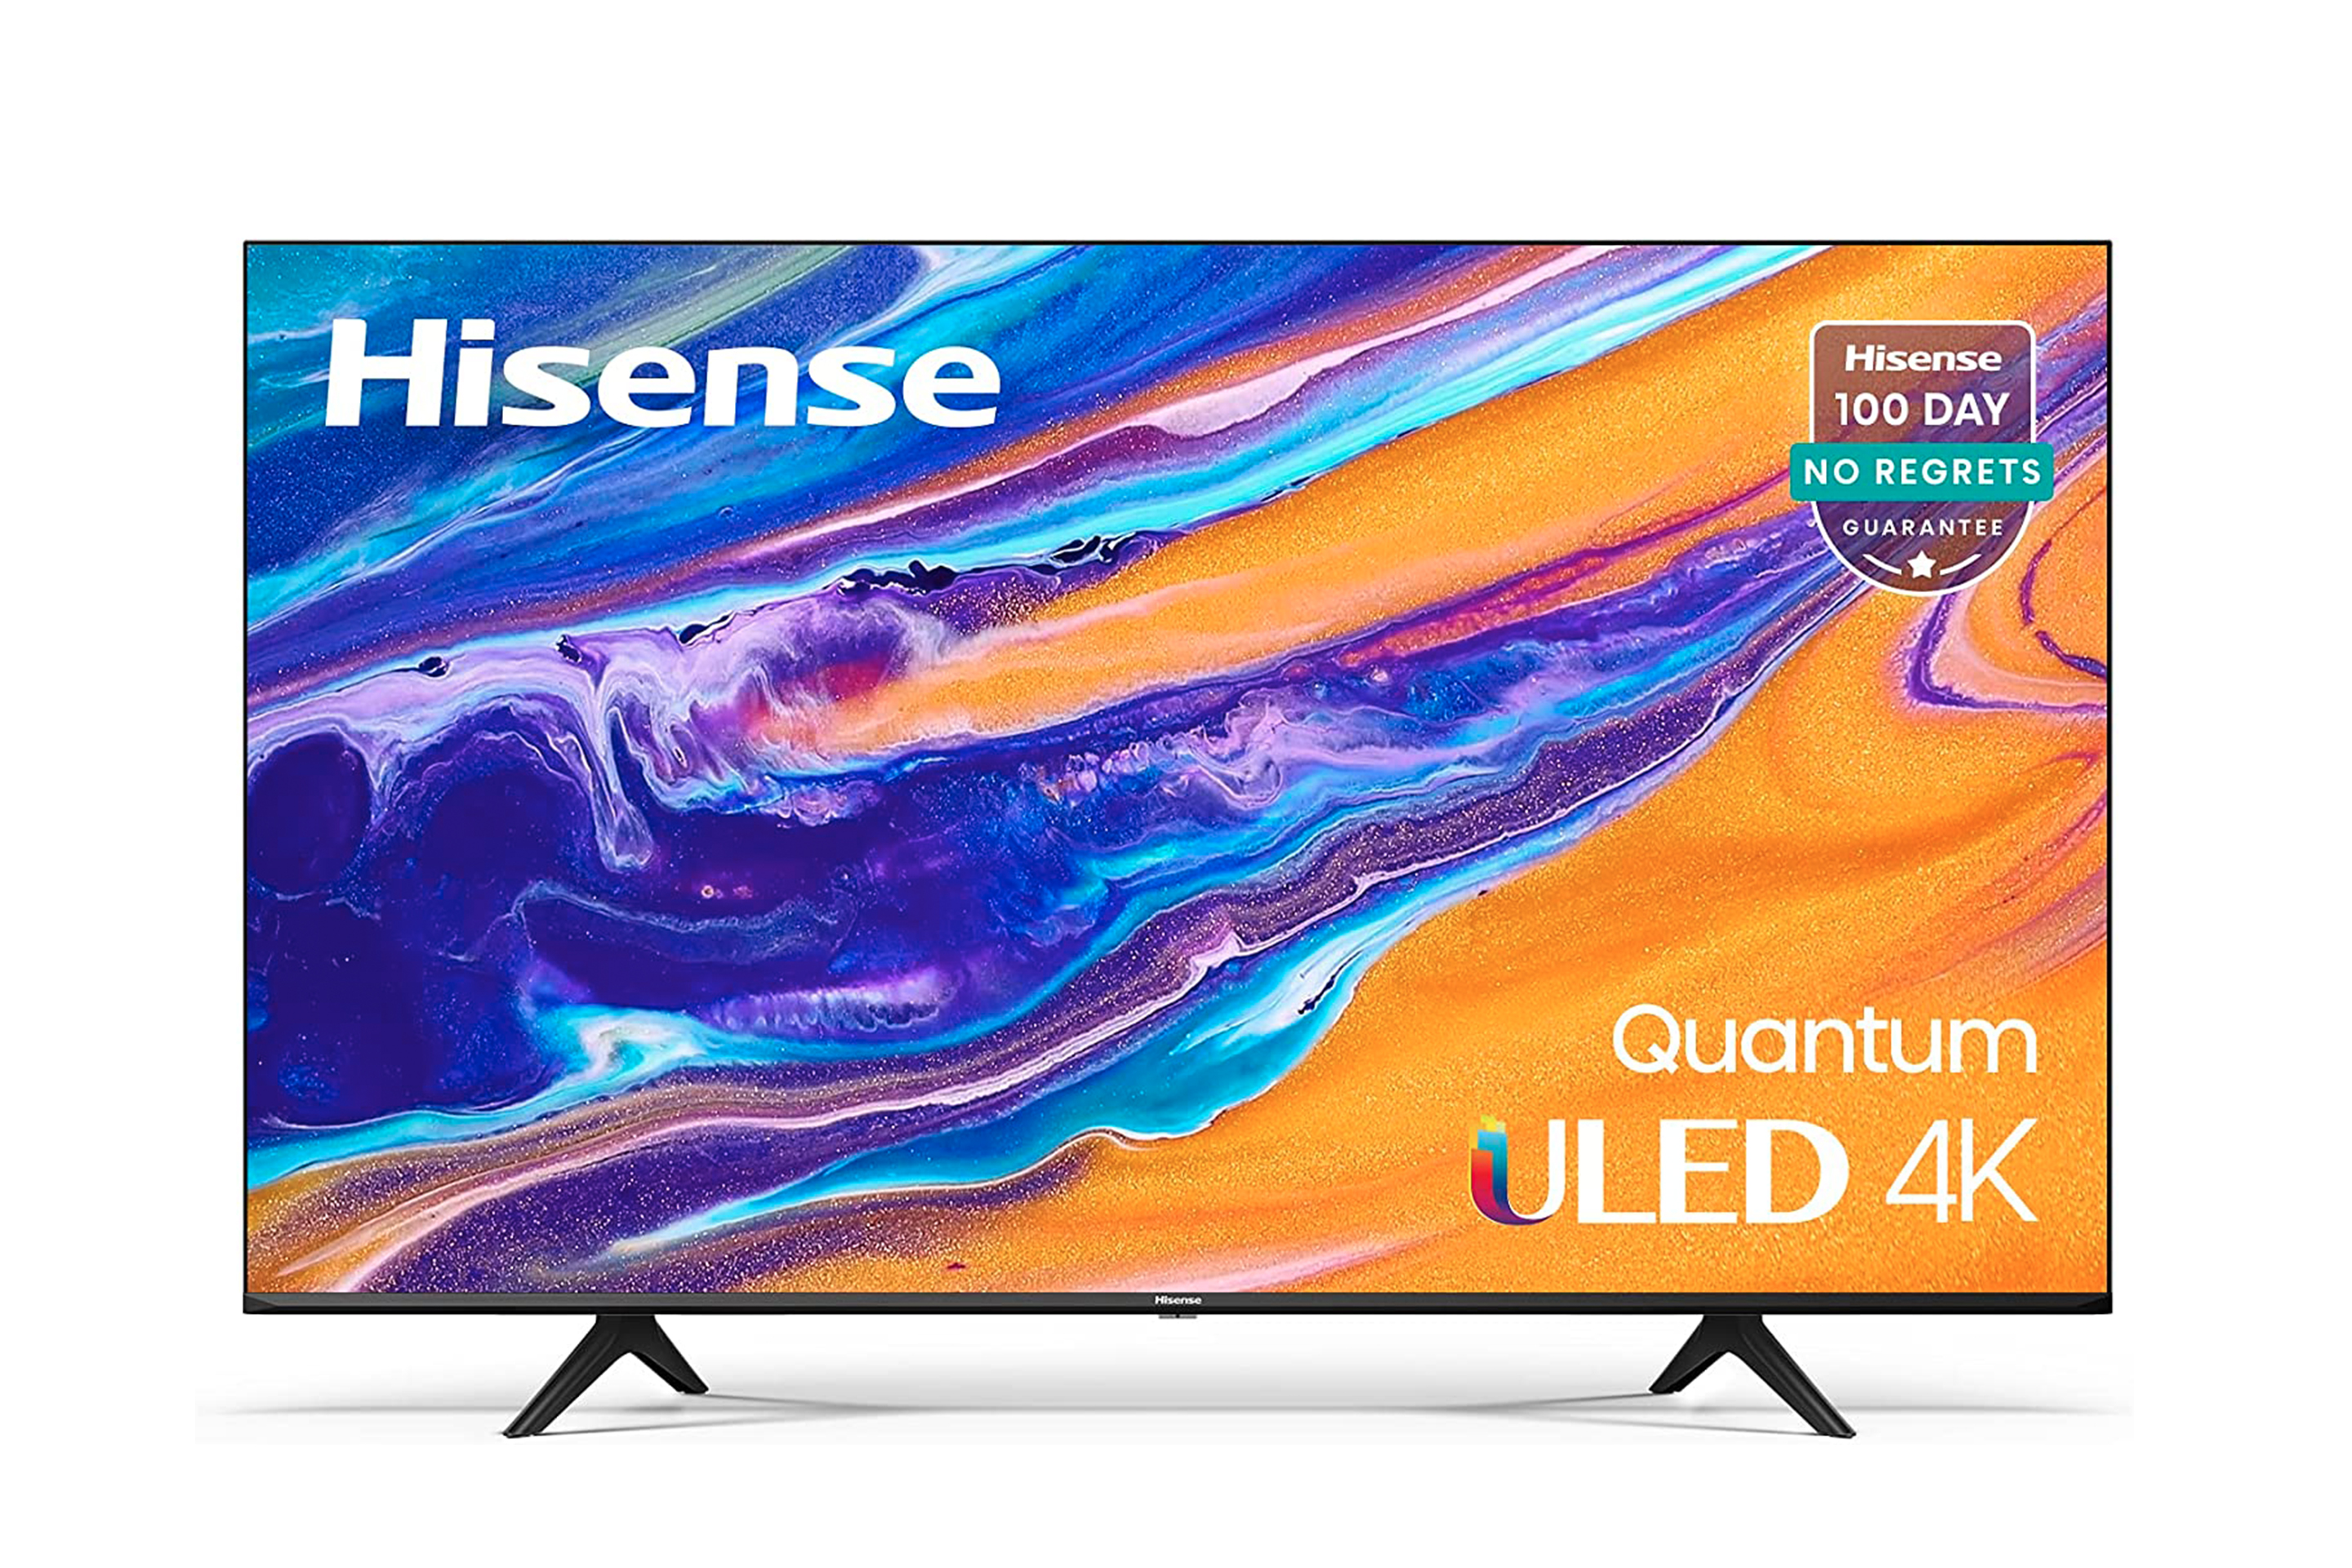 Hisense ULED 4K-Premium 55U6G 55-Inch Smart TV